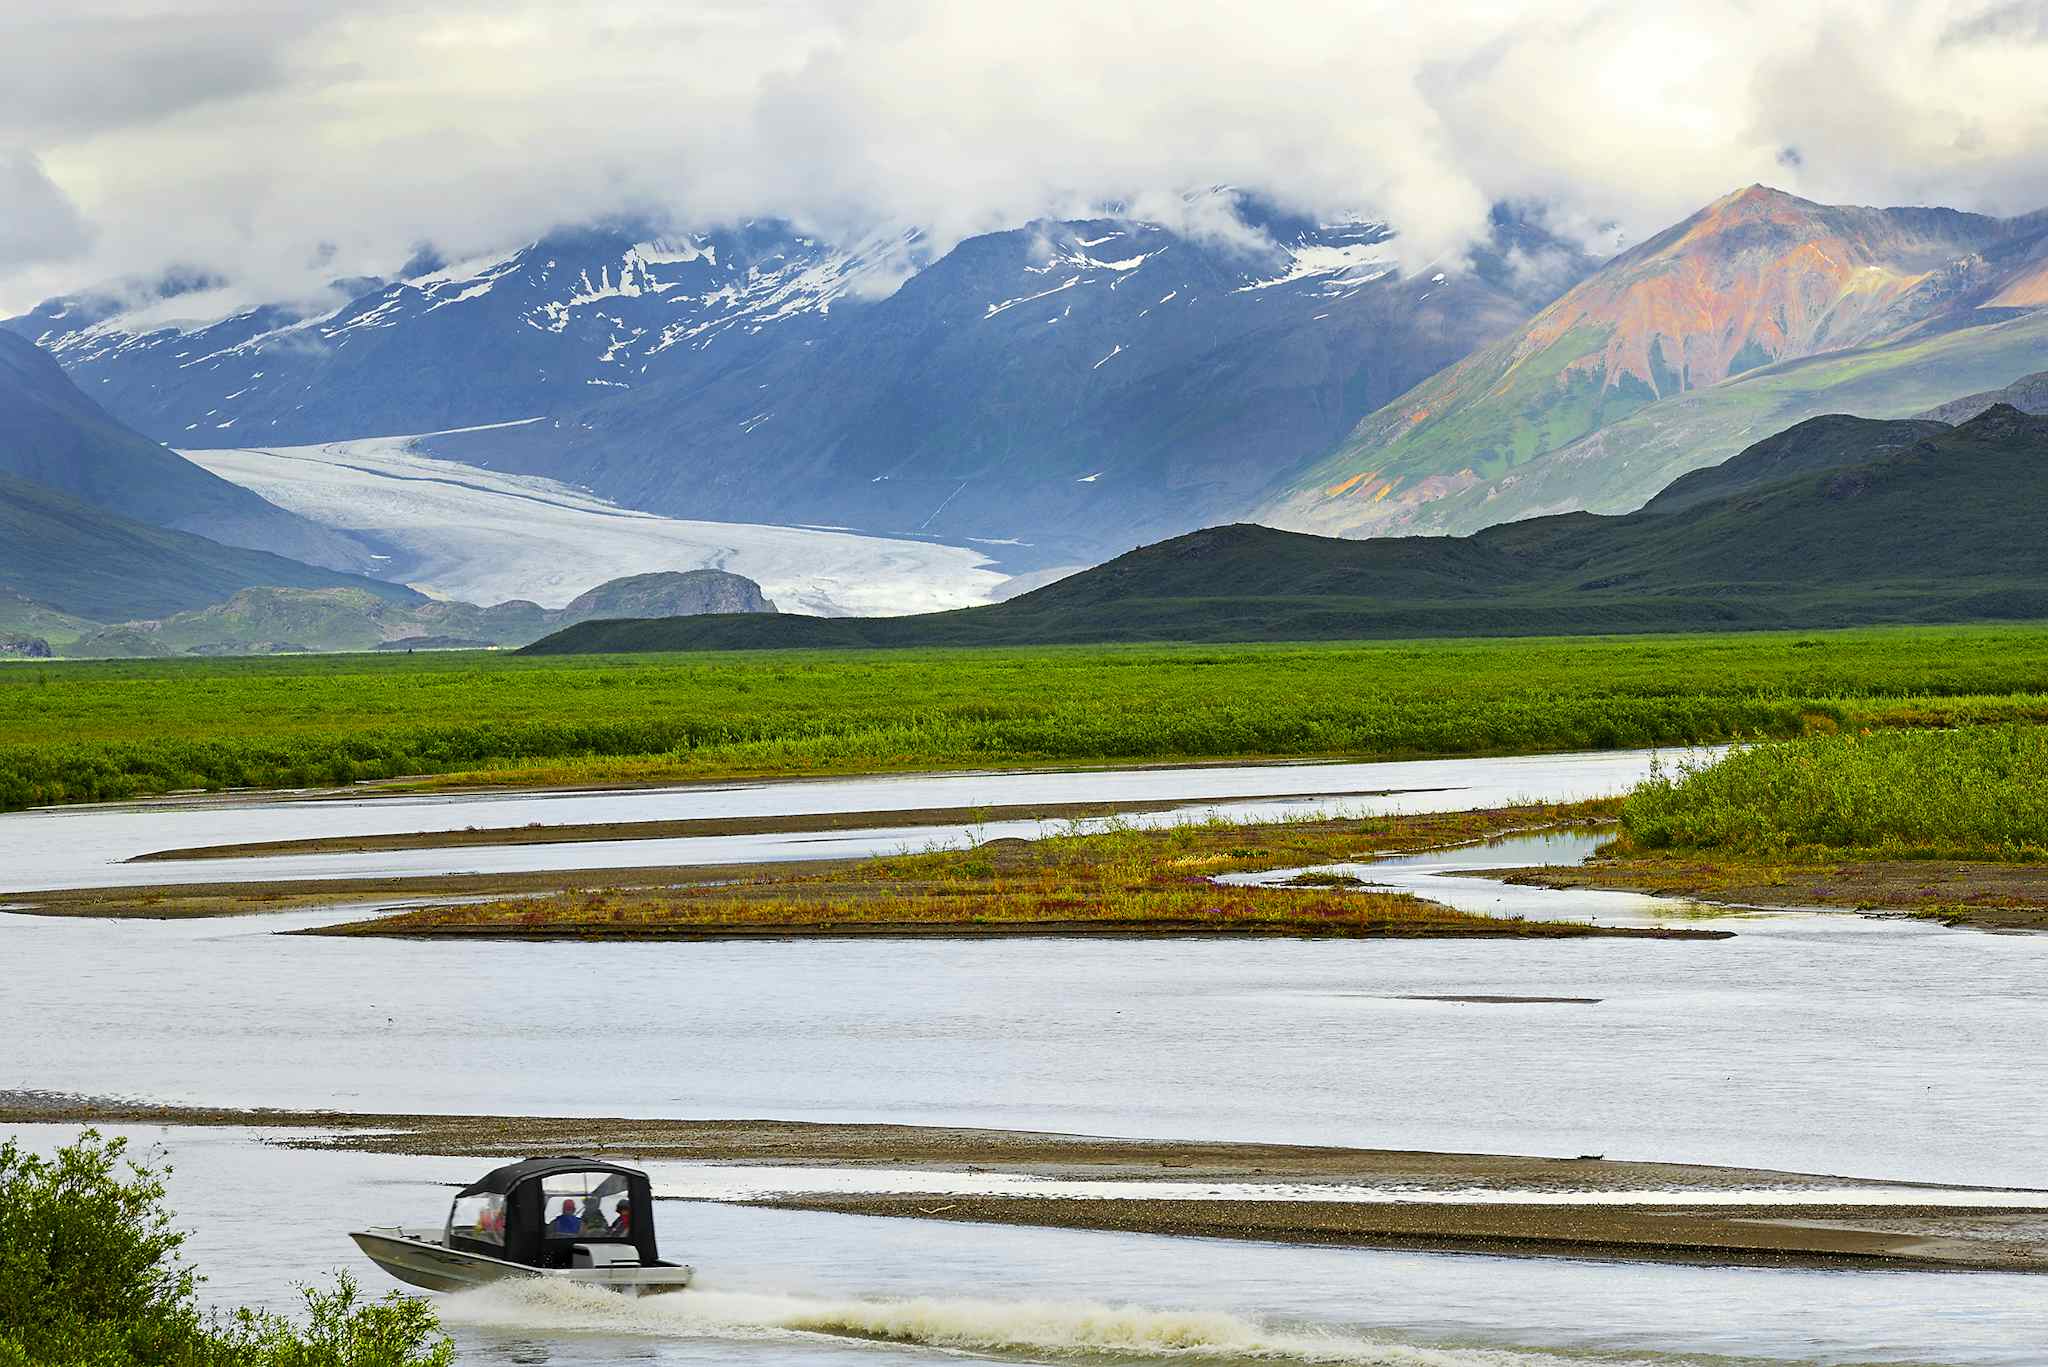 Maclaren River in Alaska, USA
Shutterstock: 1228717153